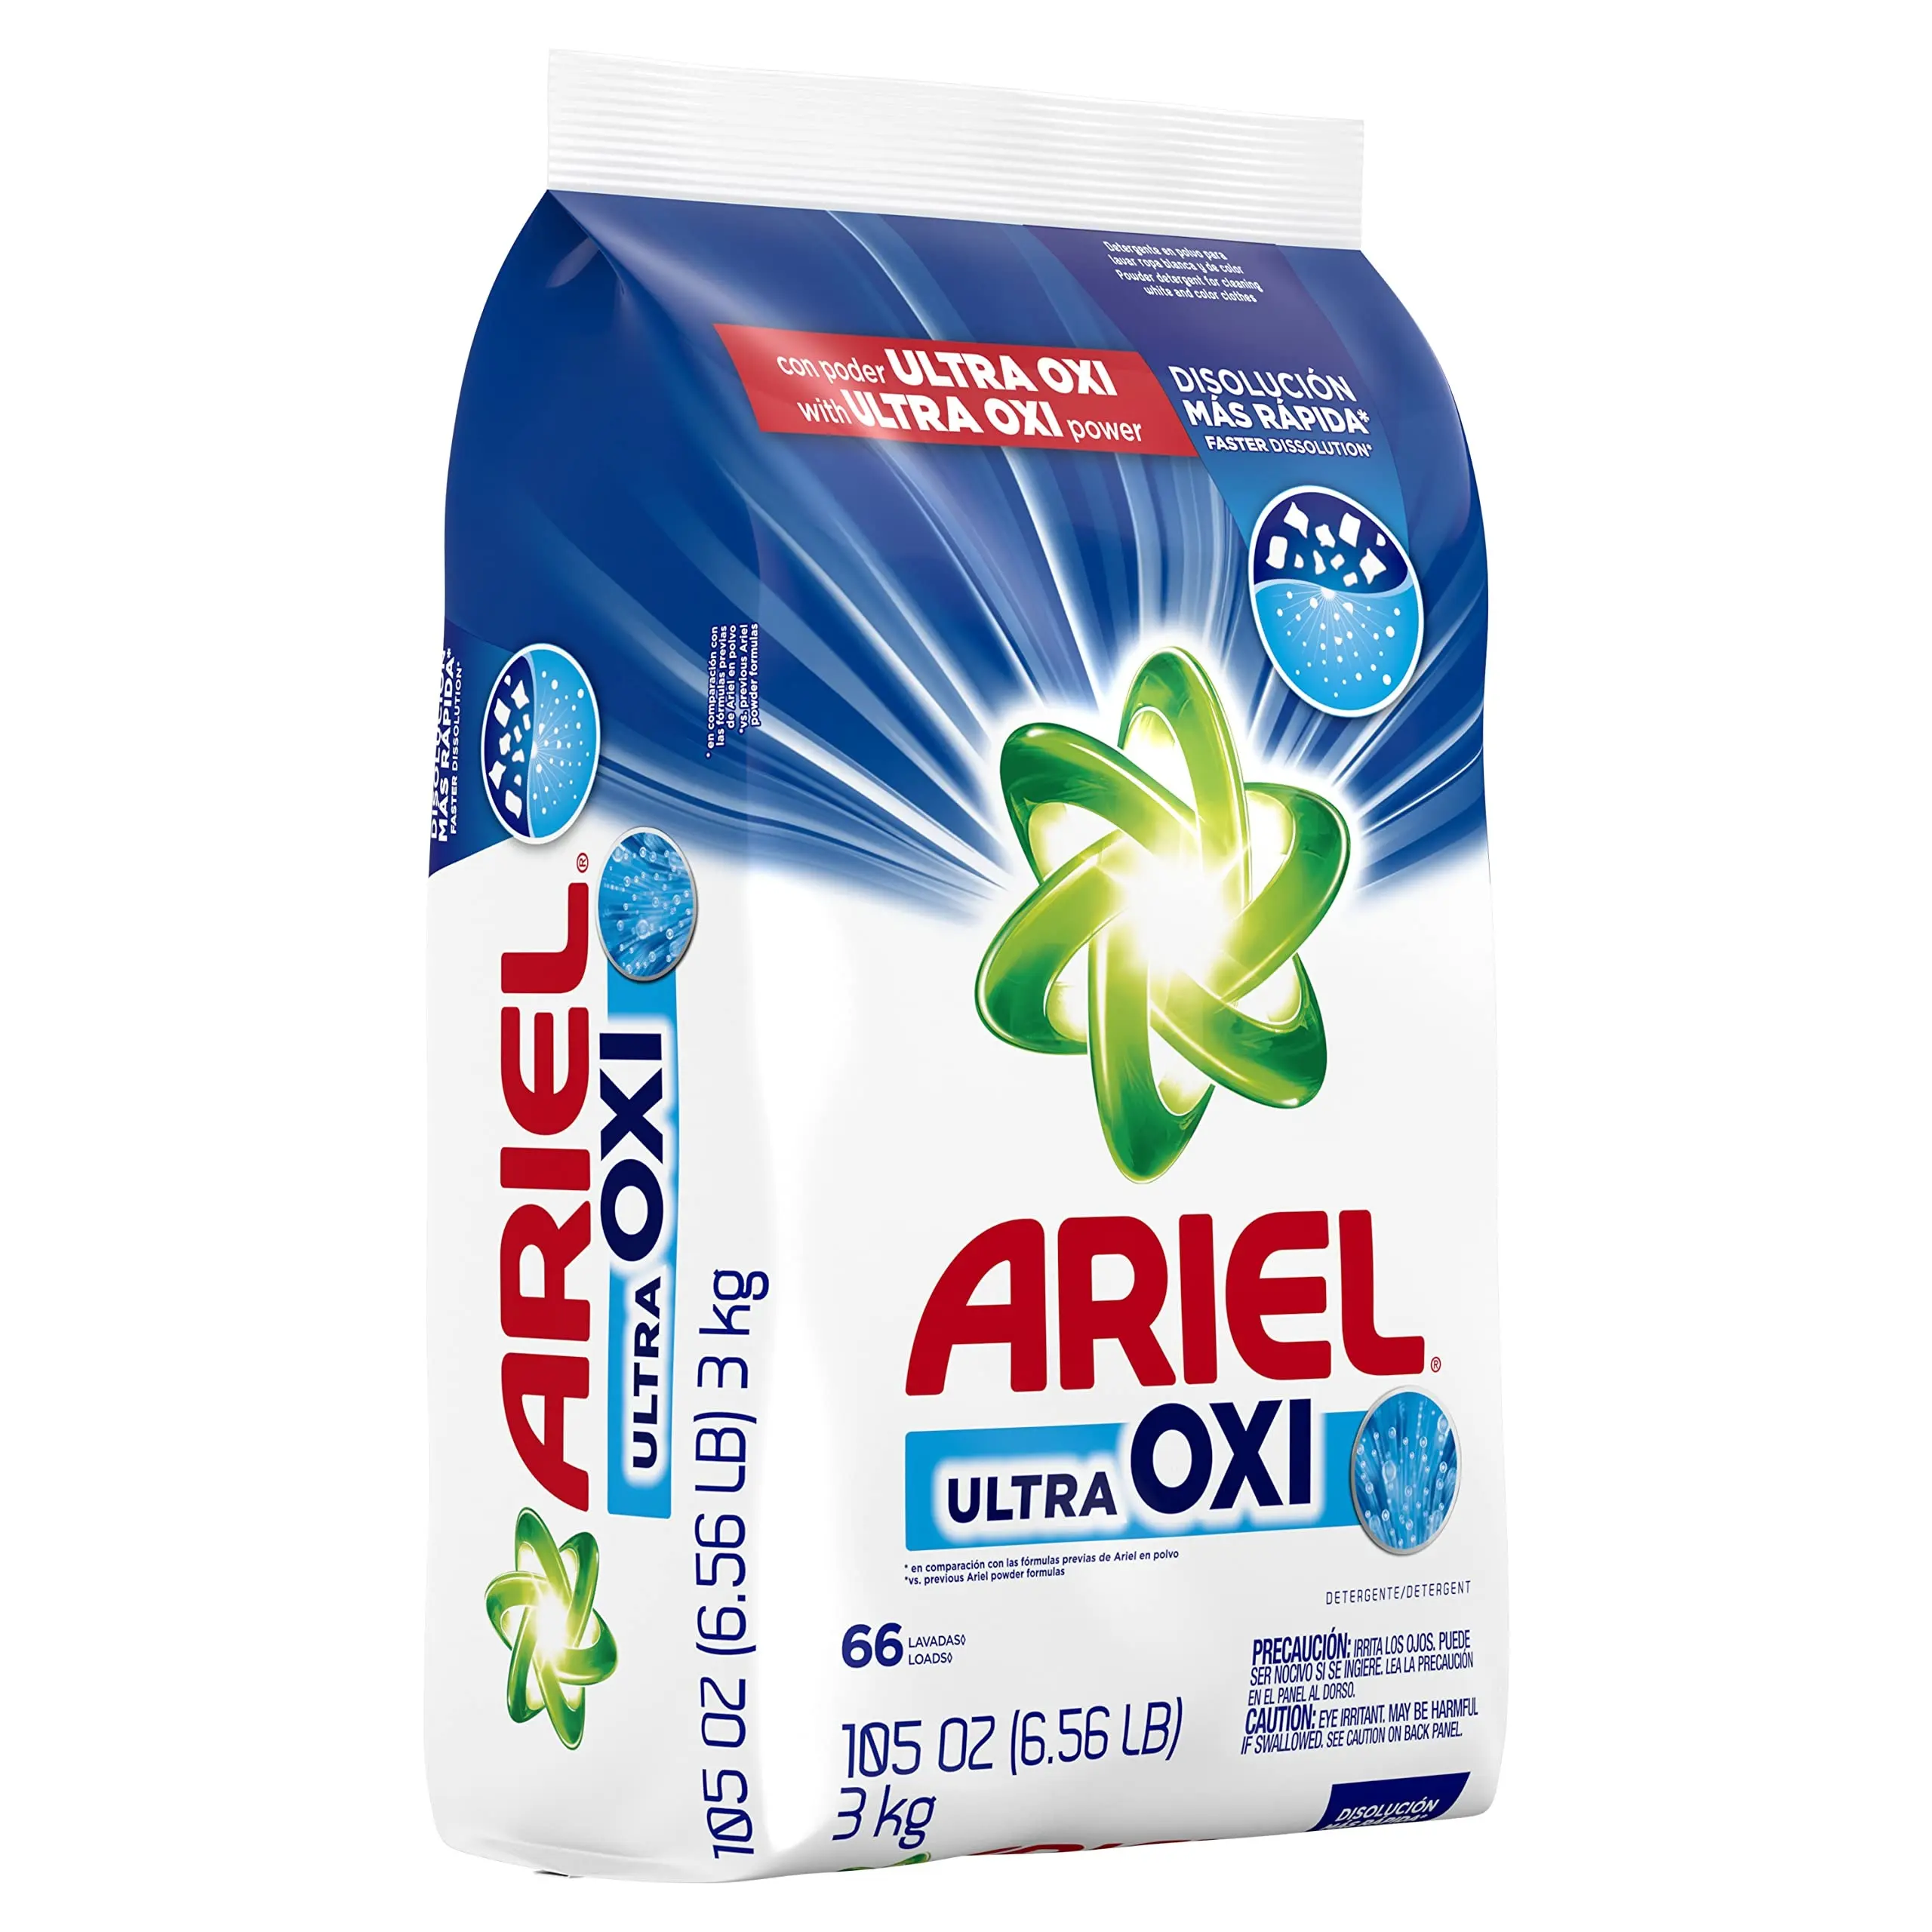 Ariel Aquapuder Ultra Efeito Oxi Detergentes Lavanderia